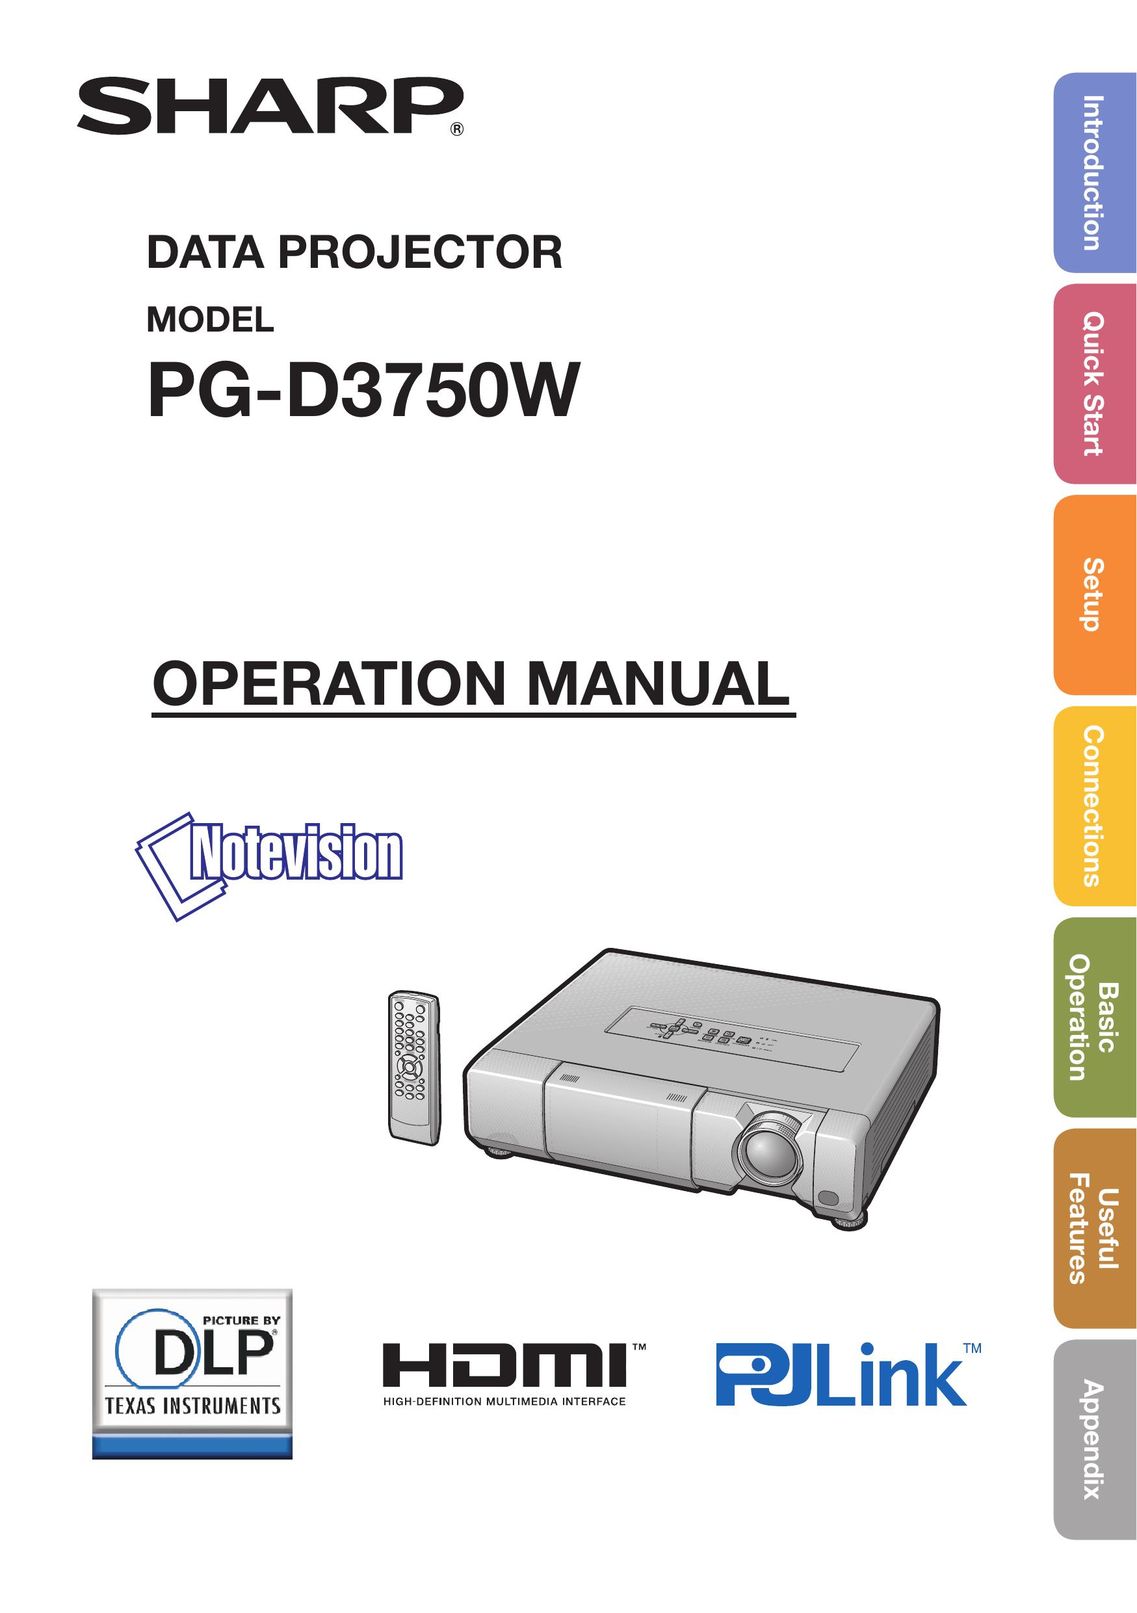 Sharp PG-D3750W Projector User Manual